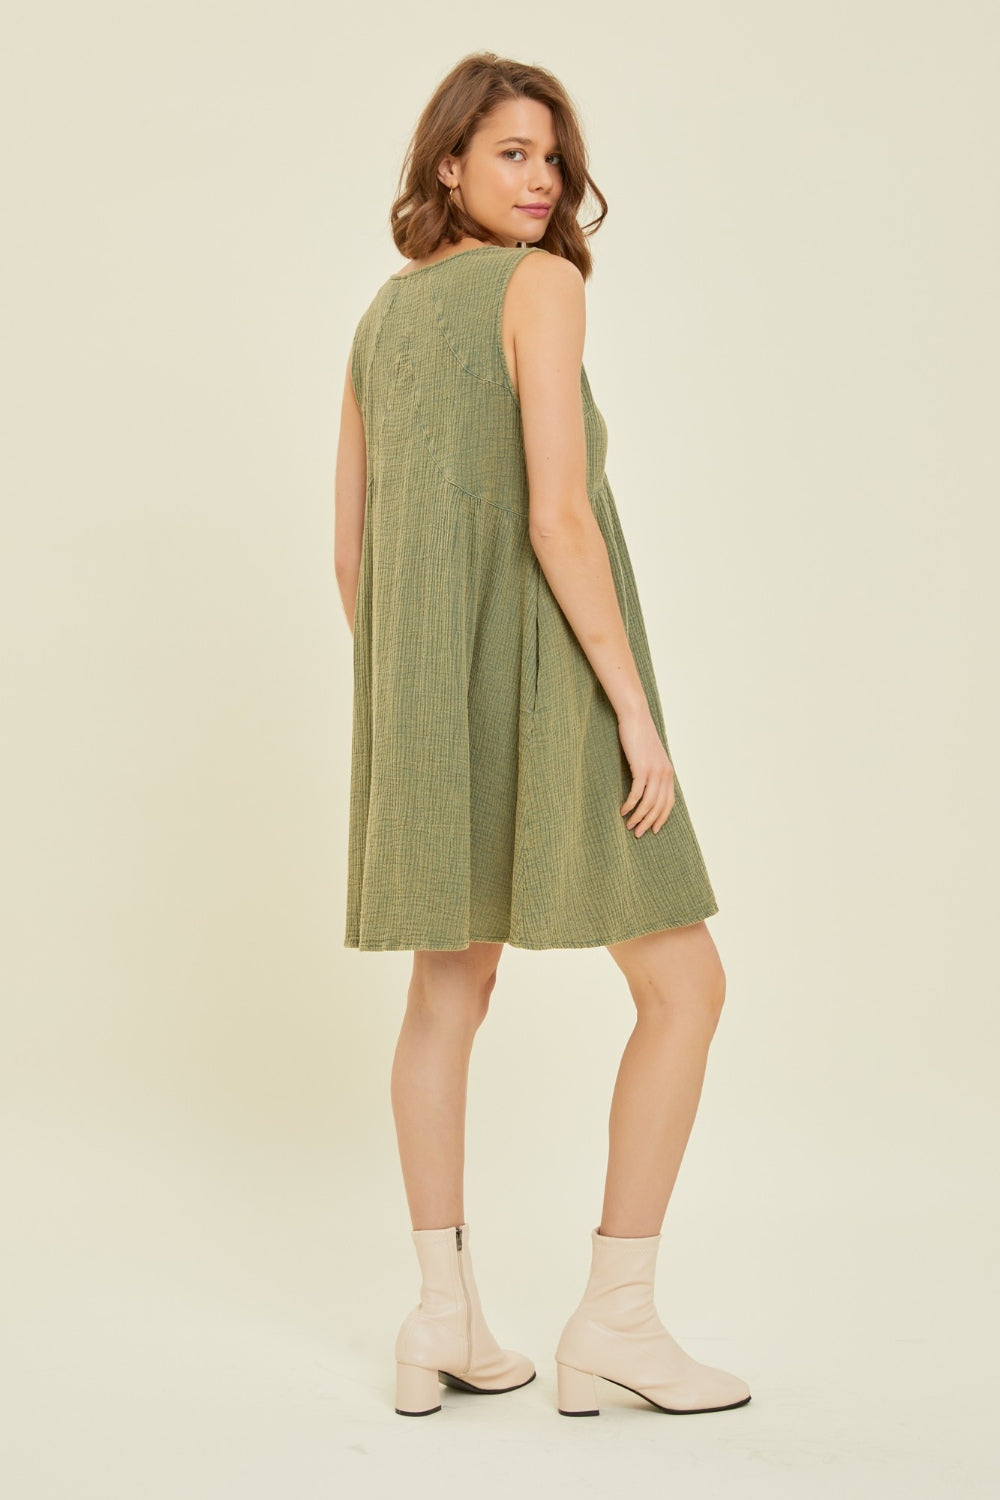 HEYSON Full Size Chic Texture V-Neck Sleeveless Flare Mini Dress - An Elegant Addition to Your Clothing Set